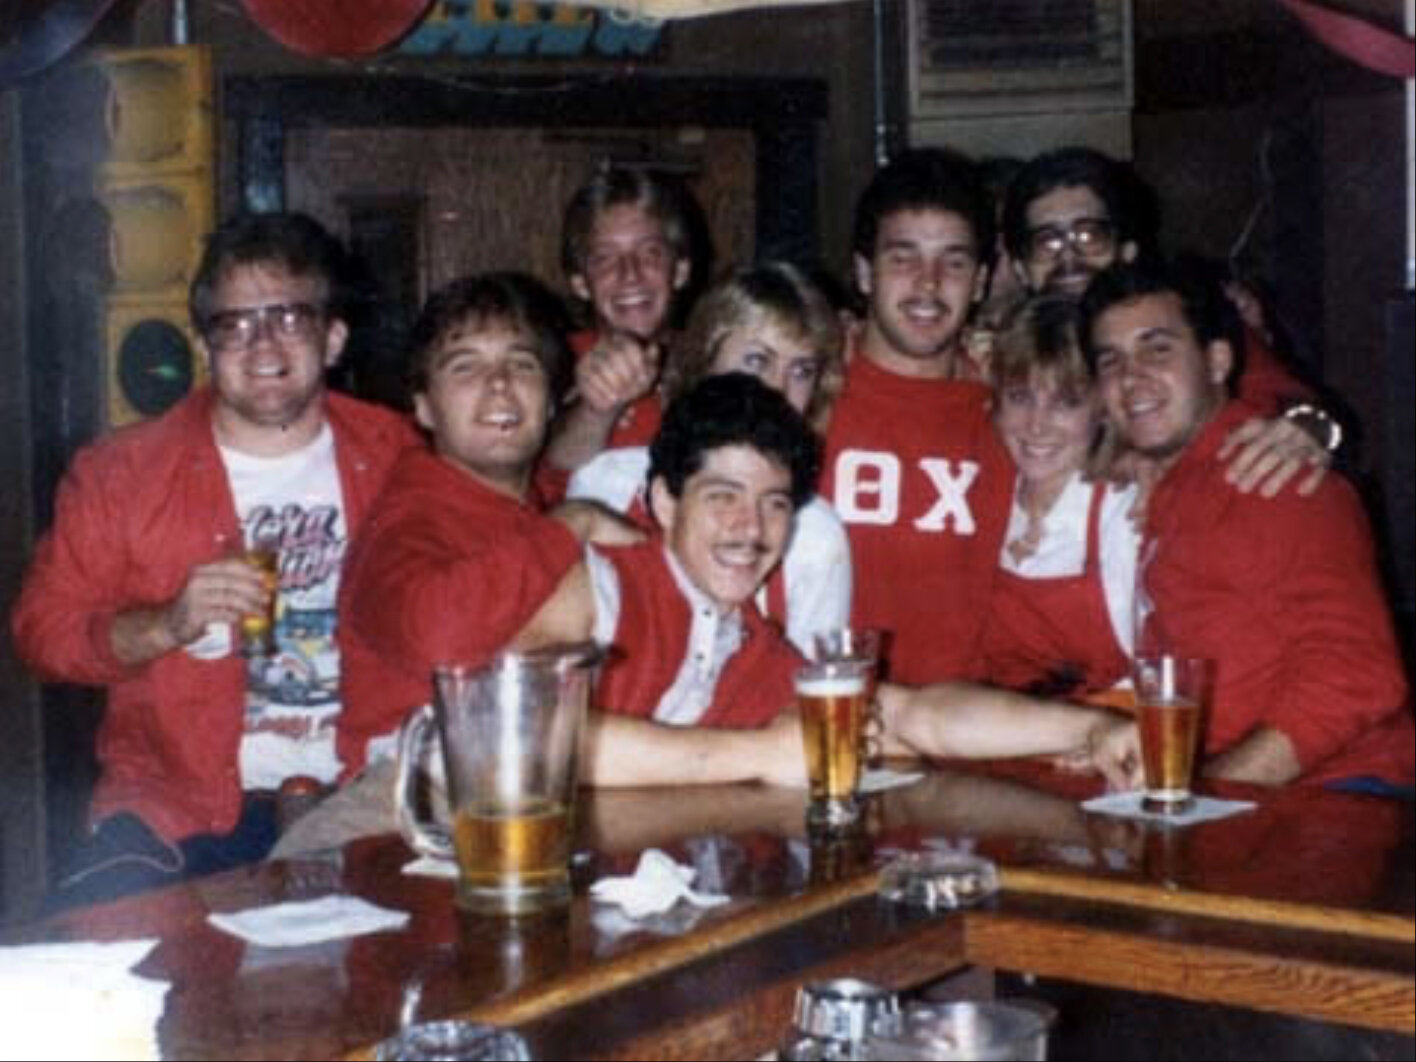  L to R: Bob Miller, John Stagliano, Stepehn Dodge, Joe Zazo, Bill Ross, Paul Formichella, Rick Grande - Fall 1984 Pledge Trip to Ohio State 